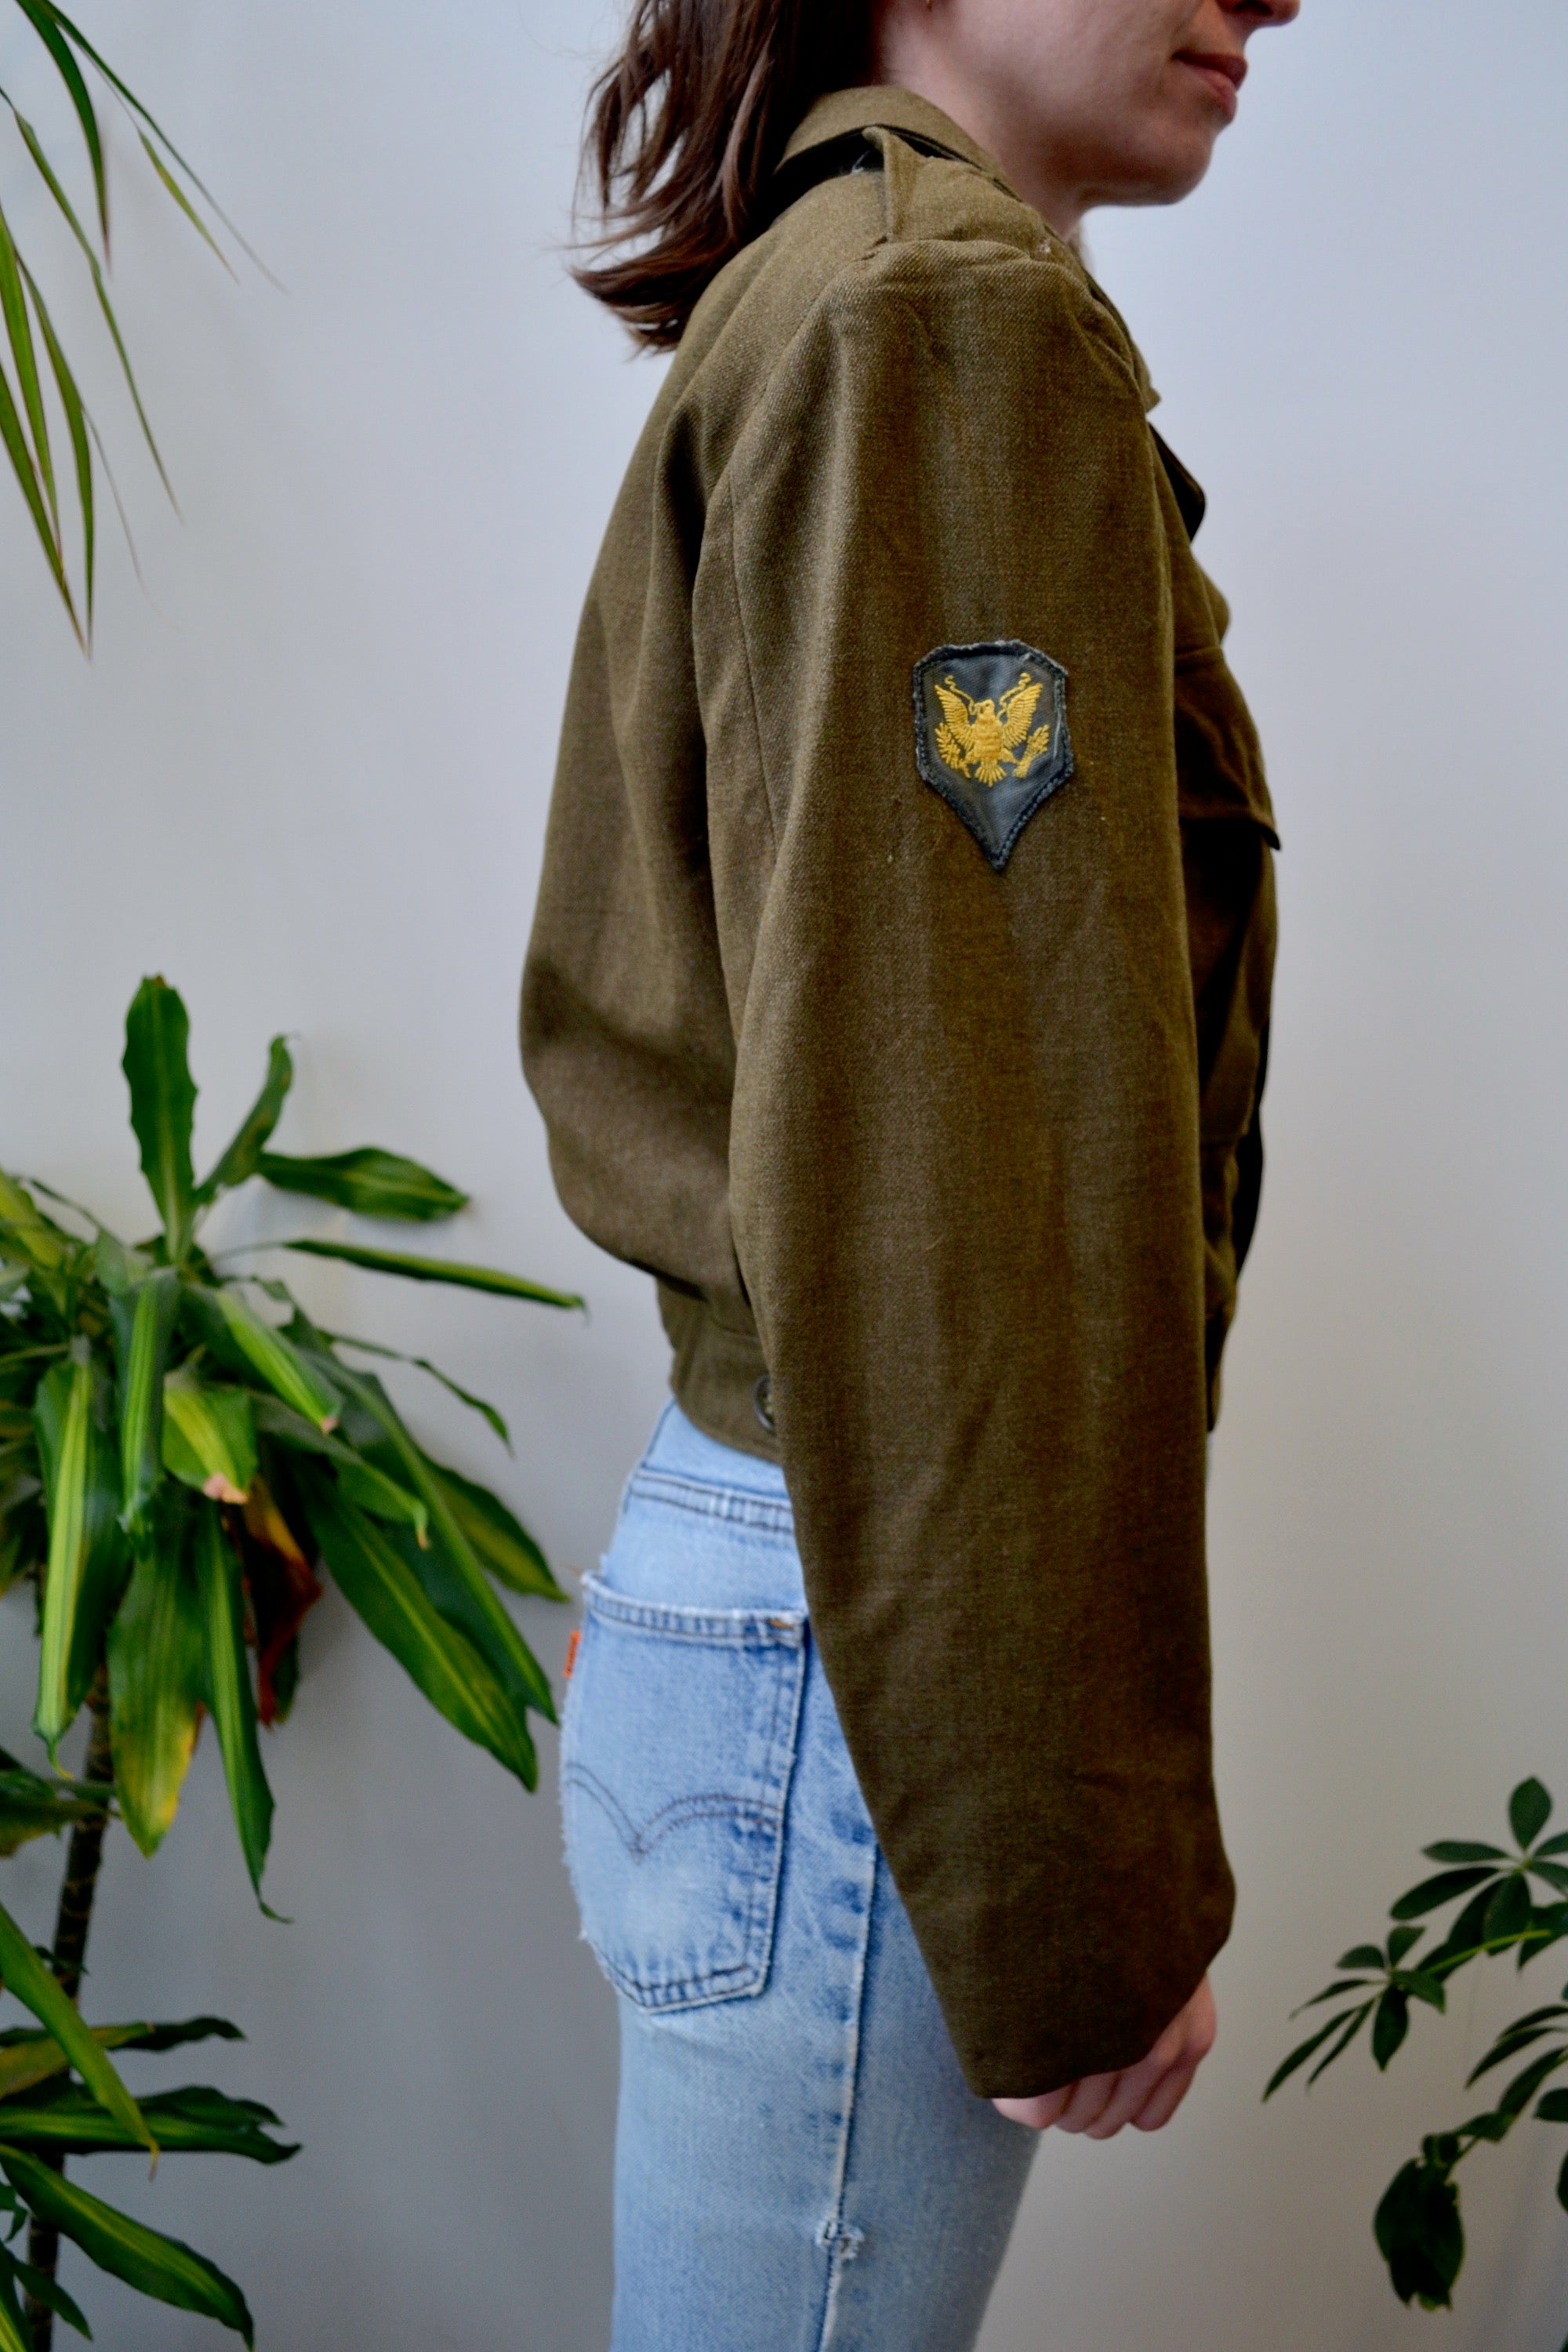 Forties/Fifties "Ike" Military Jacket